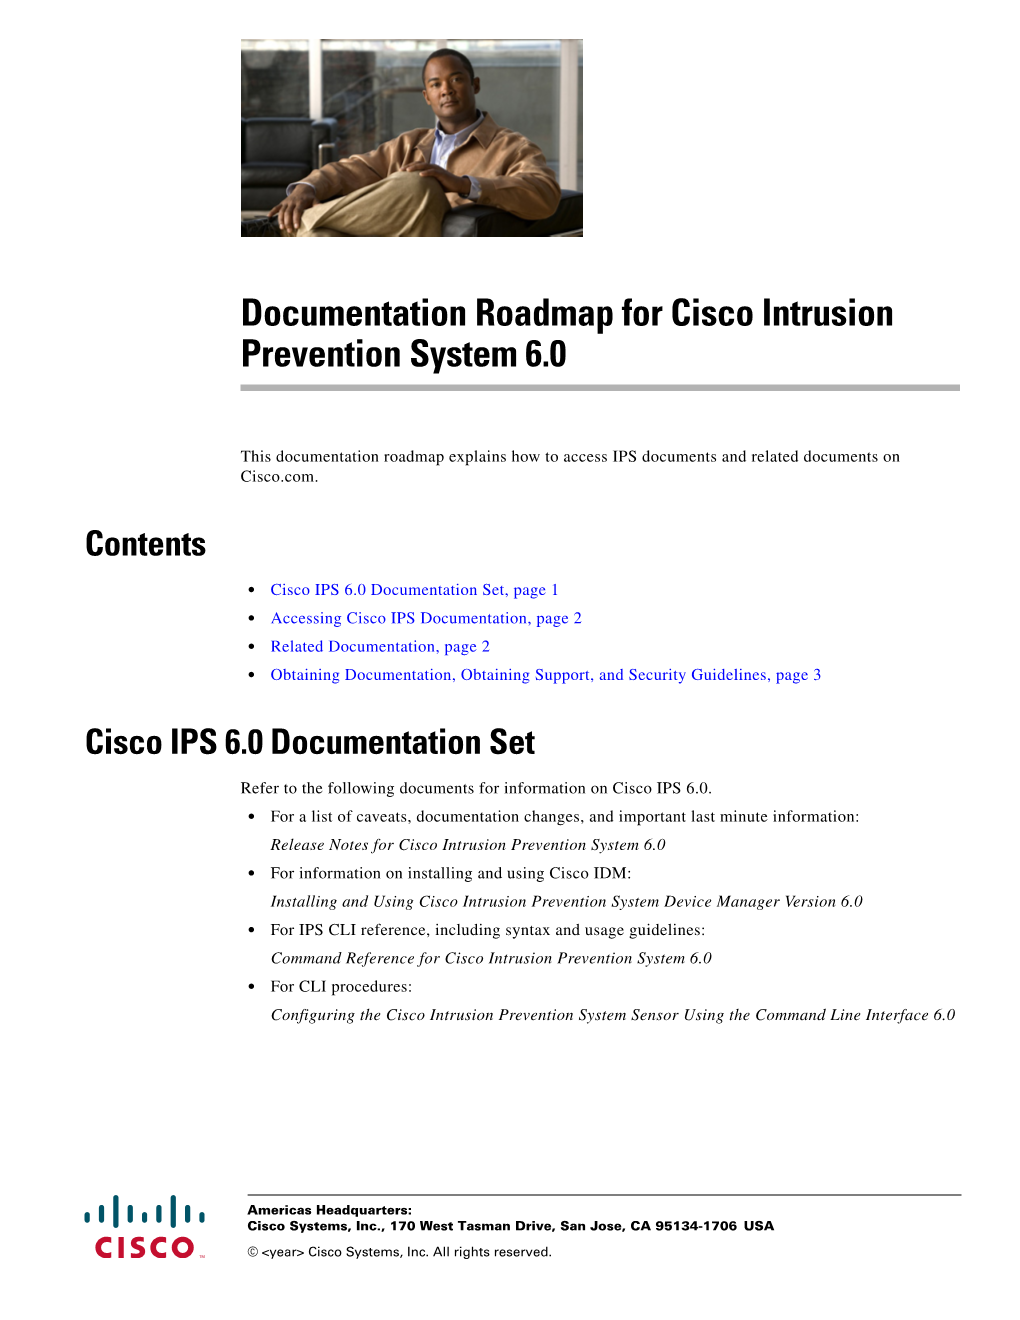 Documentation Roadmap for Cisco Intrusion Prevention System 6.0